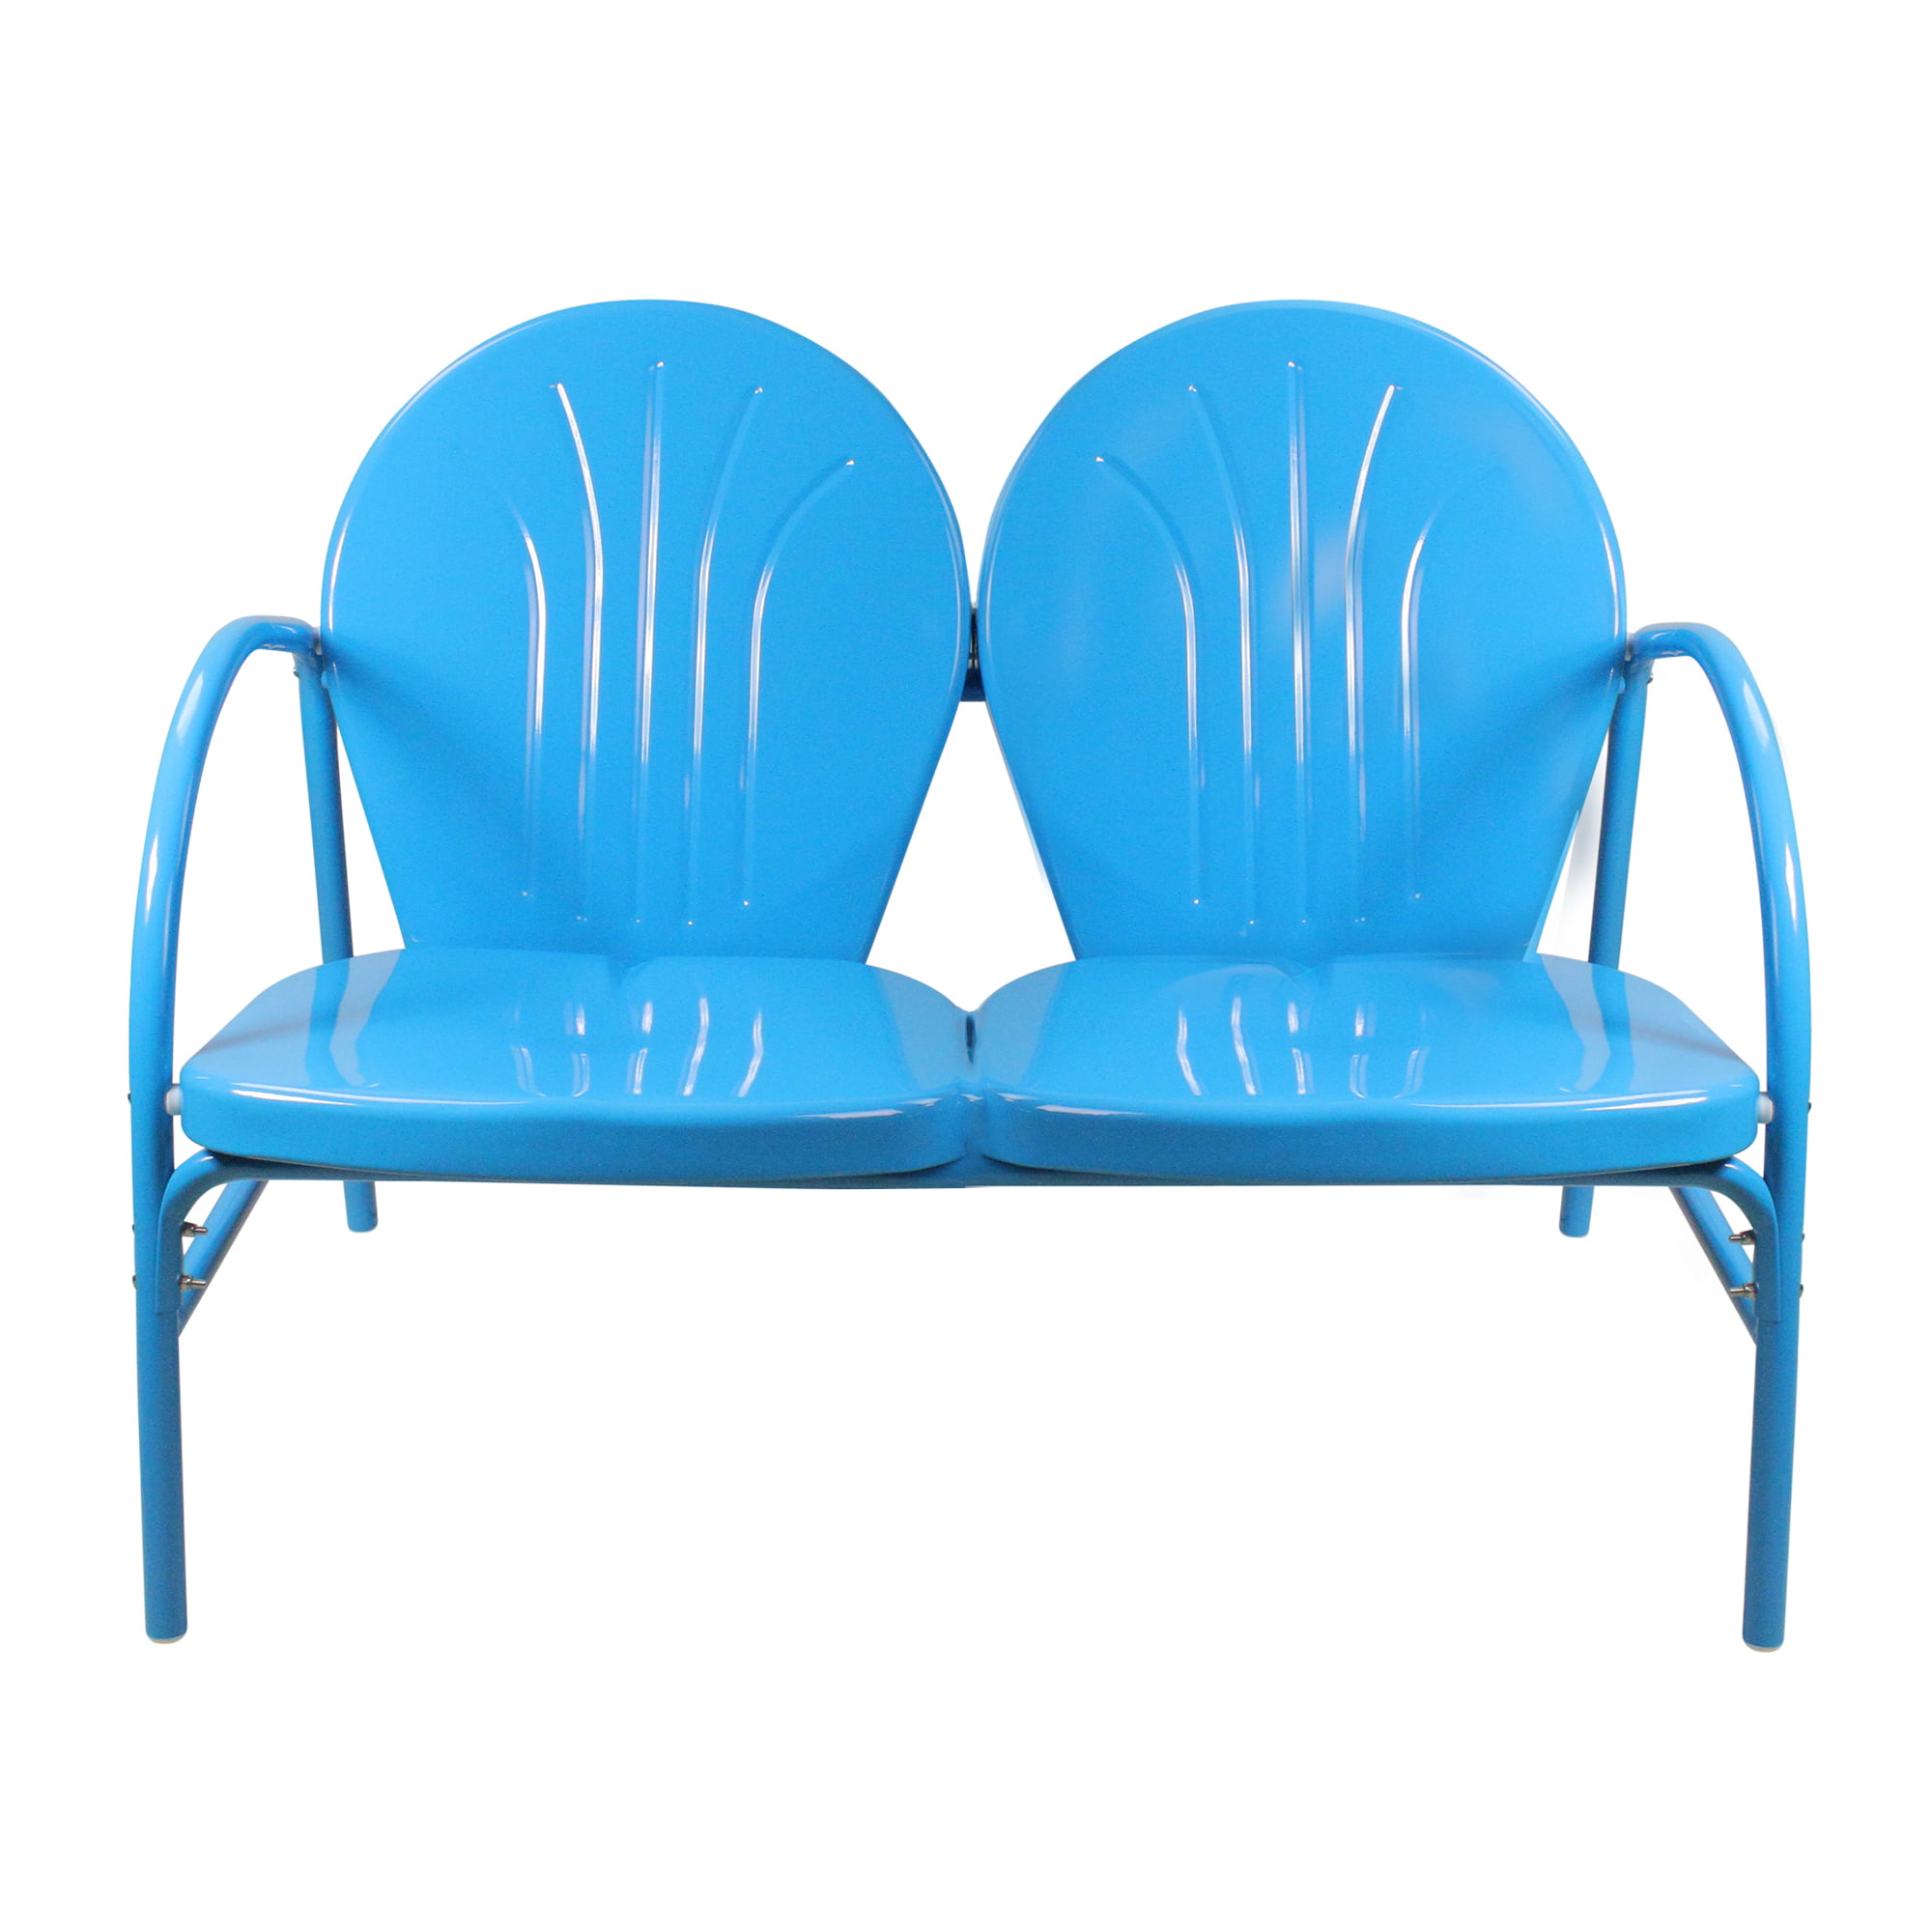 41" Turquoise Blue Retro Metal Tulip 2 Seat Double Outdoor